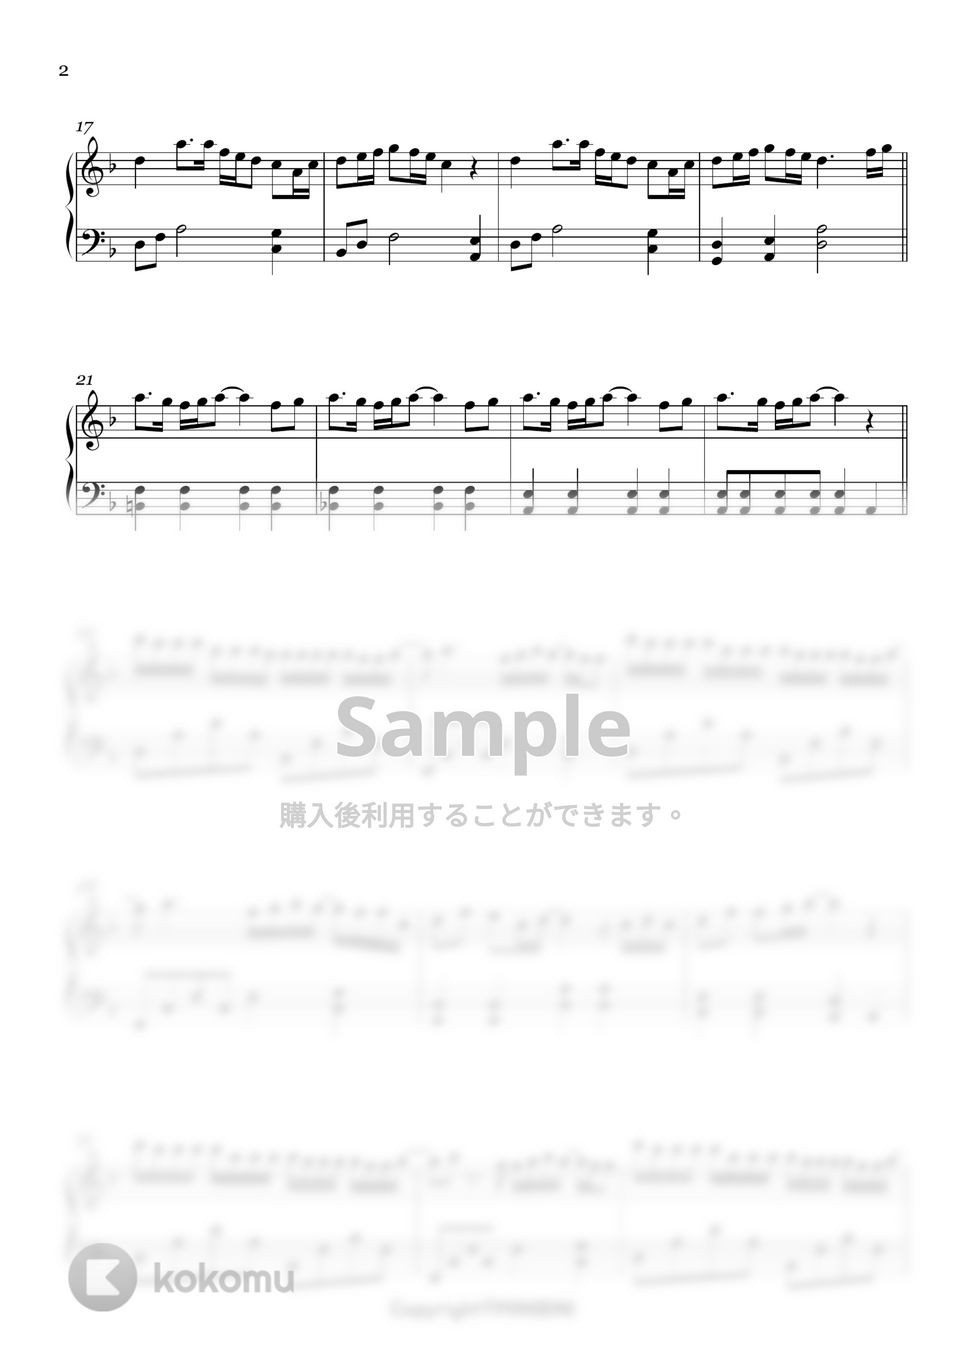 RADWIMPS - すずめ(Easy Ver.) by MINIBINI